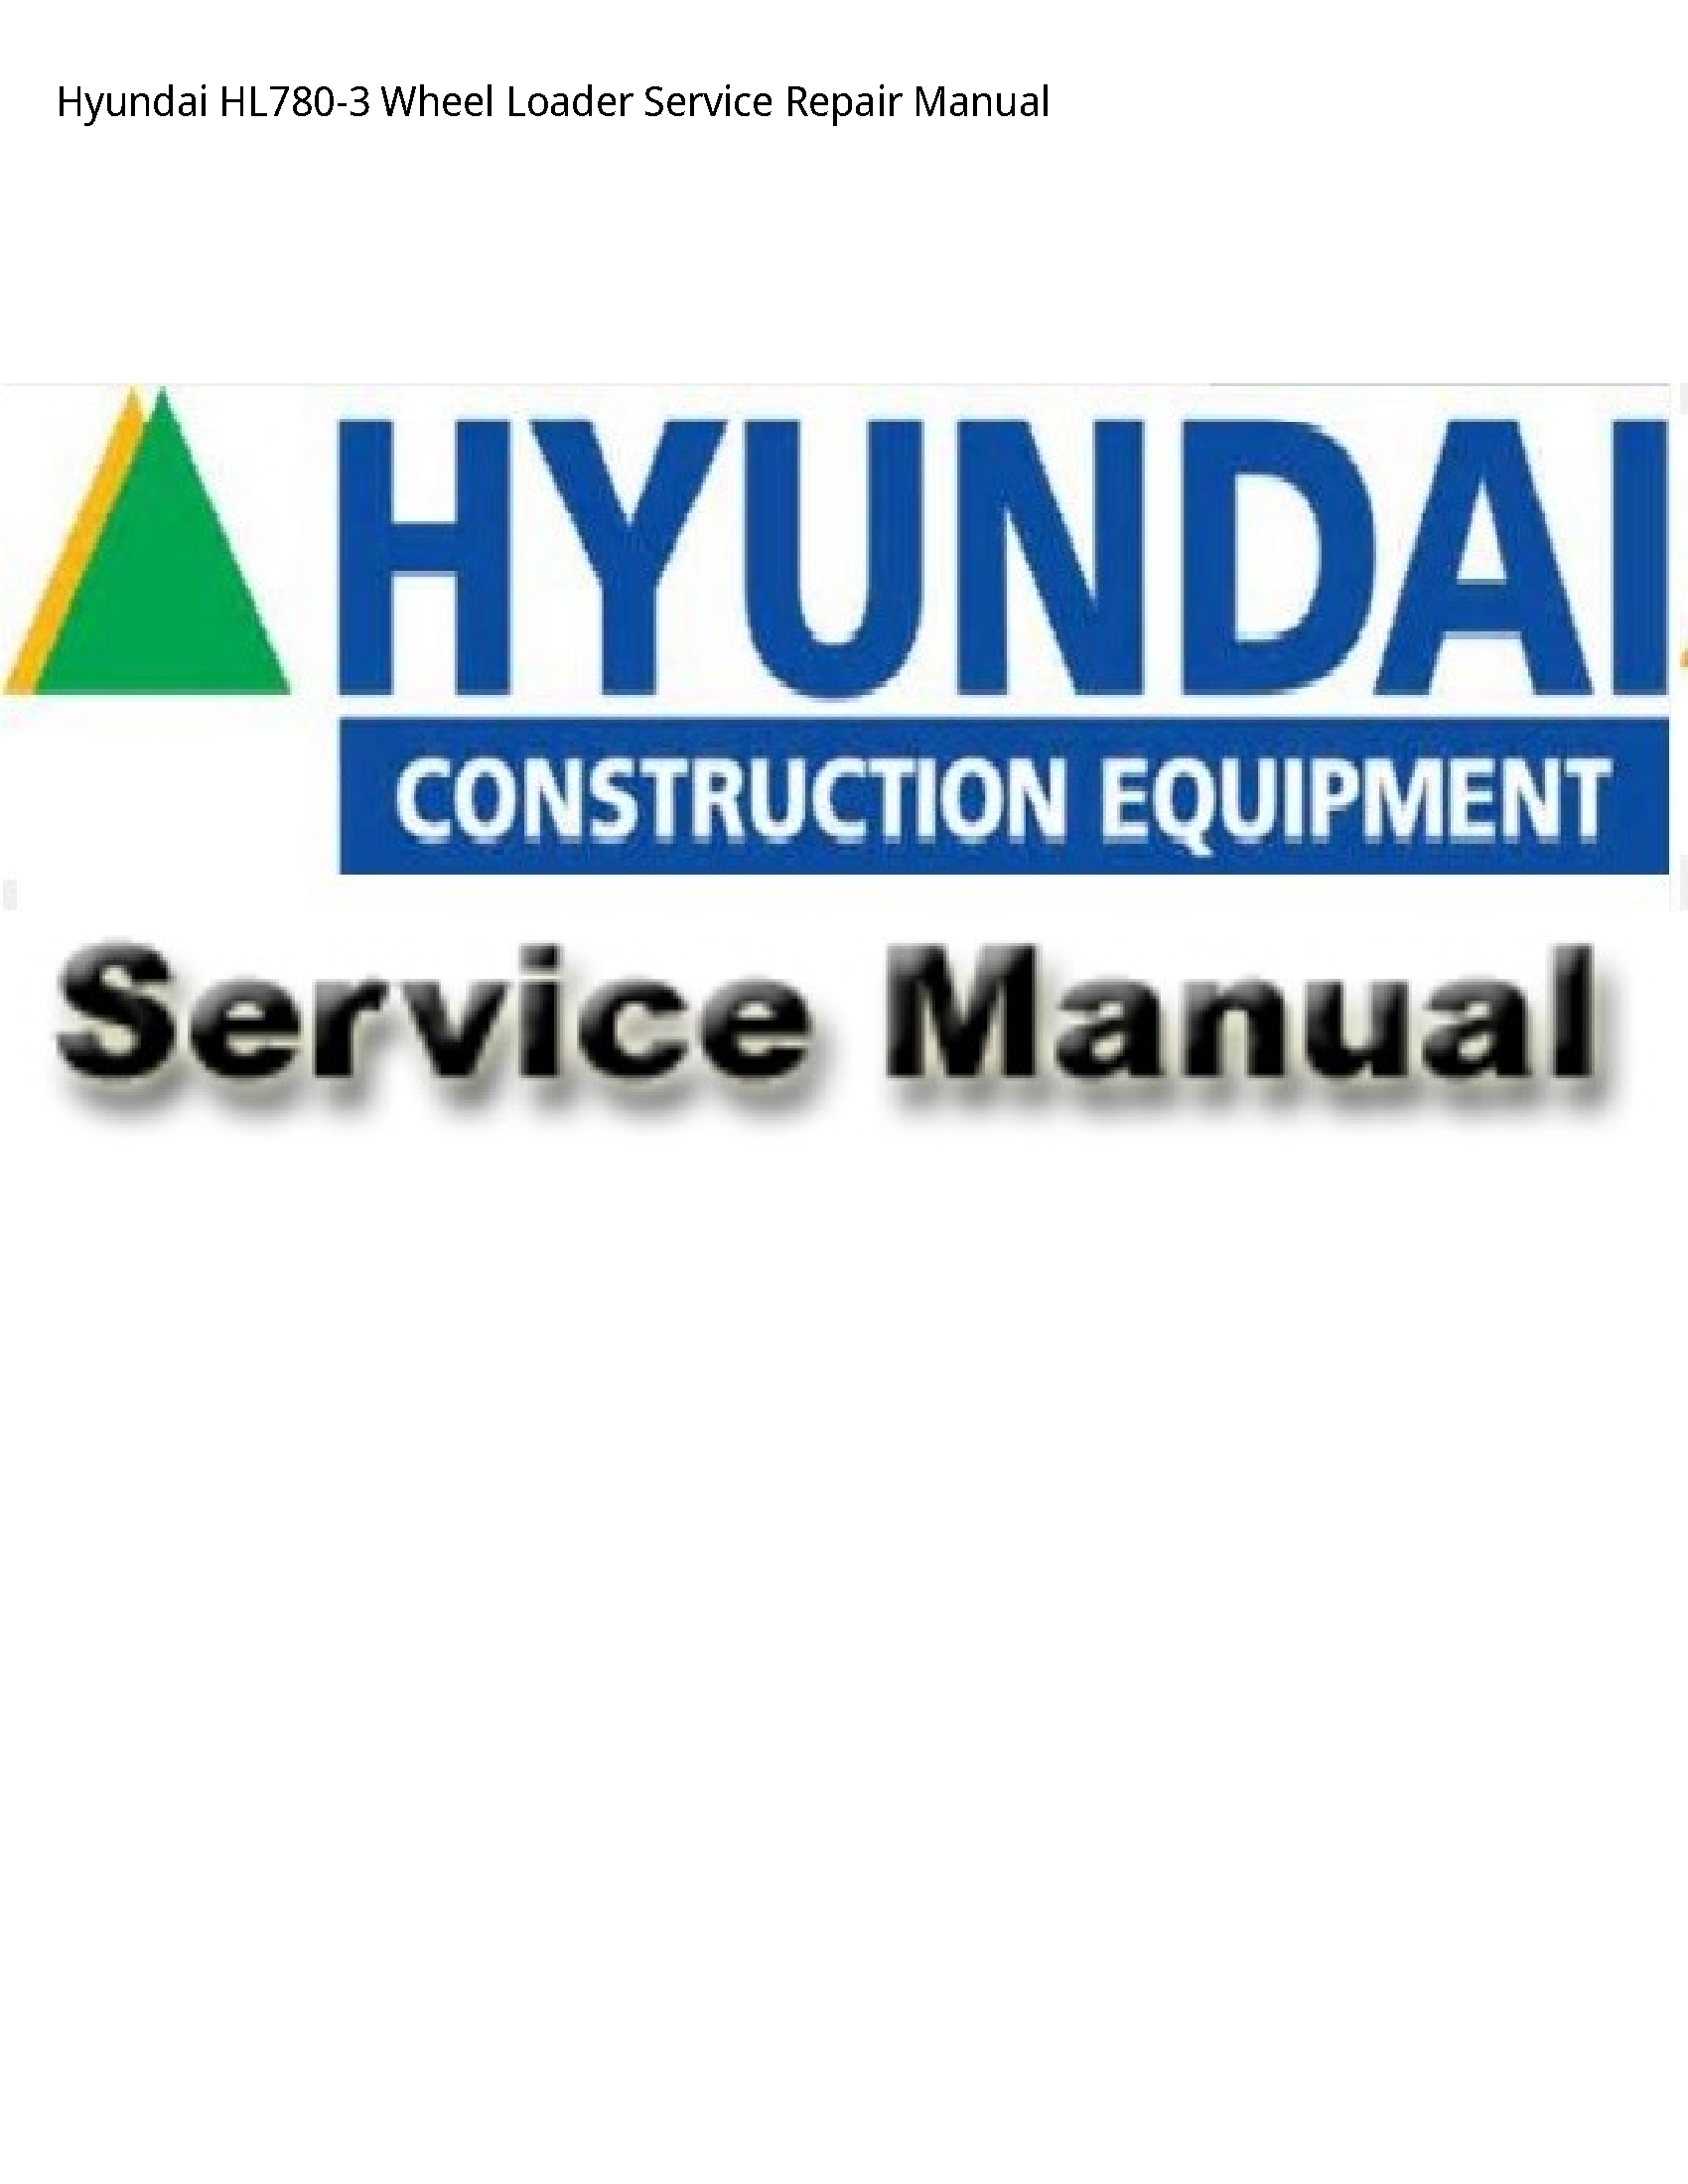 Hyundai HL780-3 Wheel Loader manual